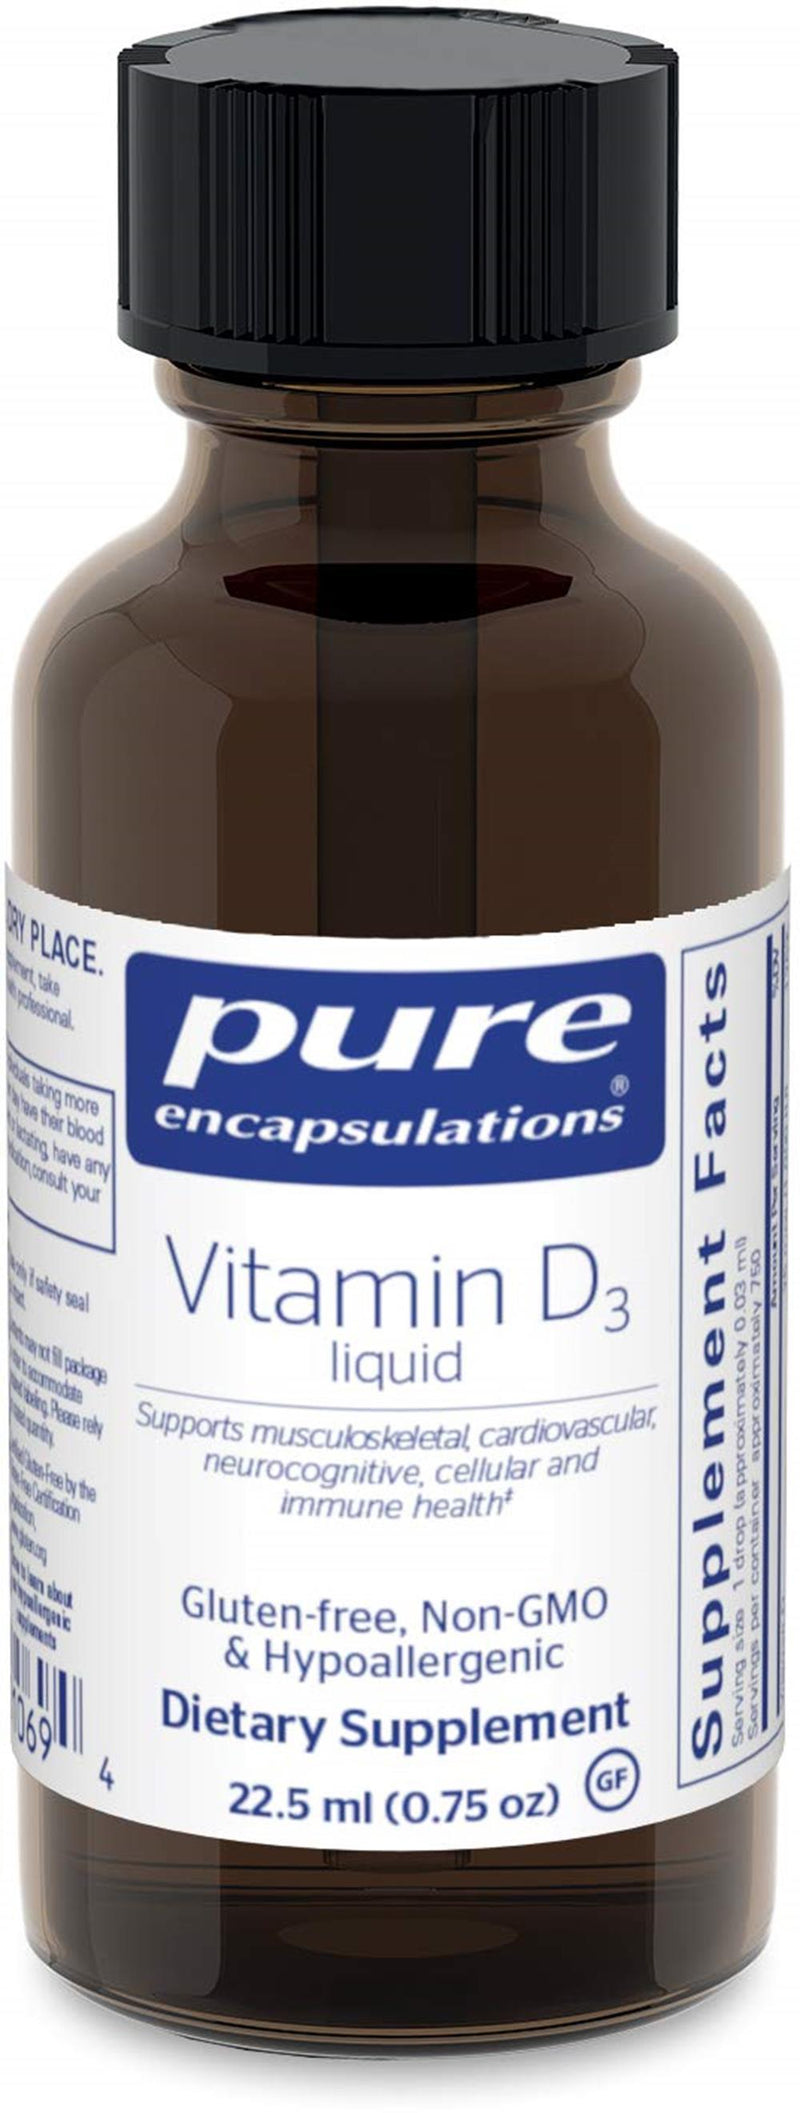 Pure Encapsulations Vitamin D3 liquid -- 22.5 mL